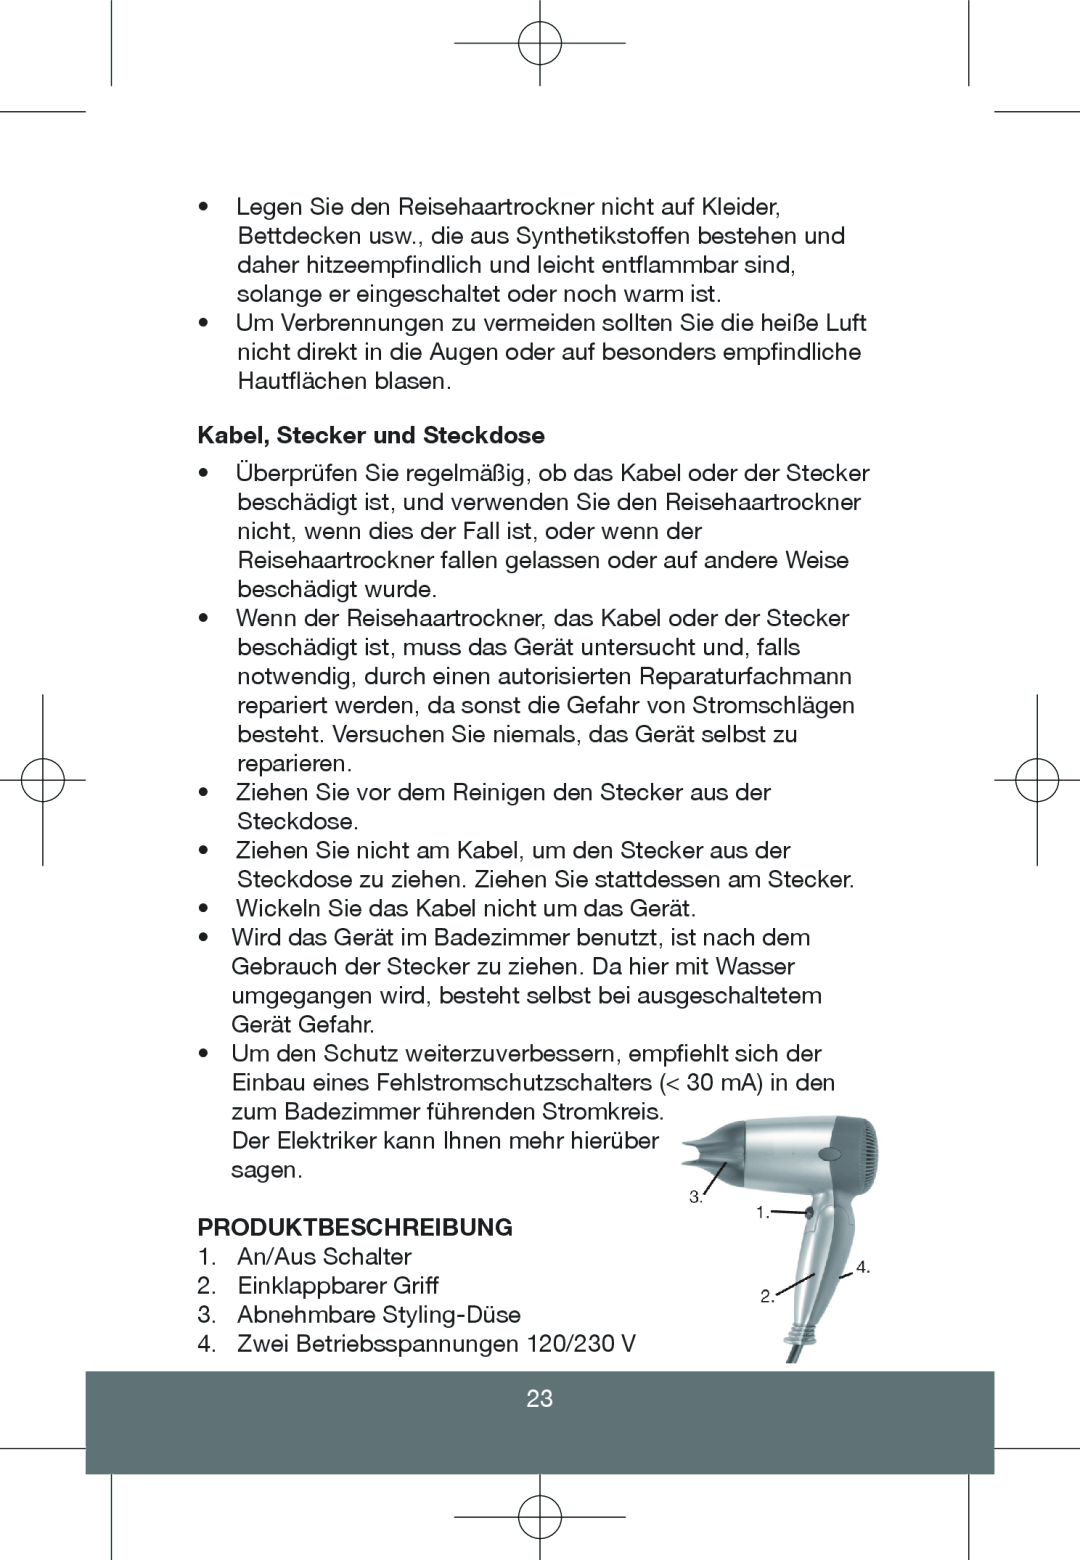 Melissa 635-101 manual Kabel, Stecker und Steckdose, Produktbeschreibung 